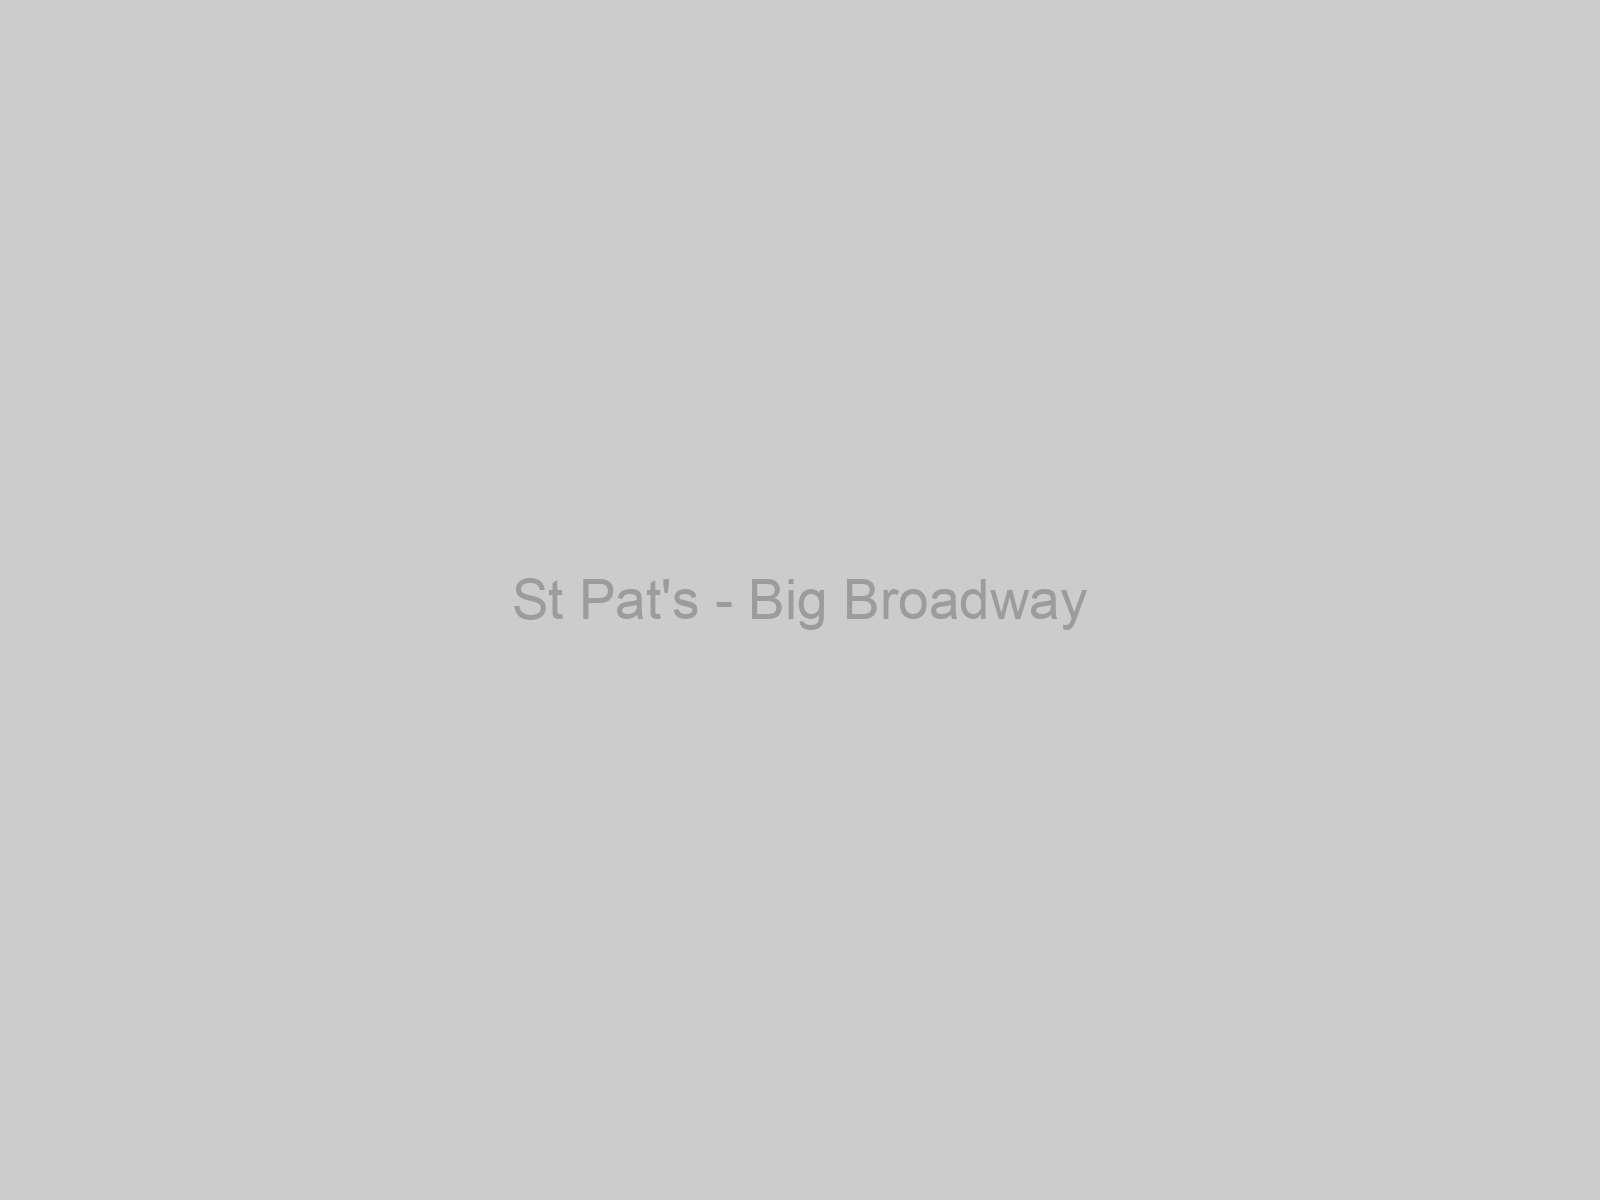 St Pat's - Big Broadway